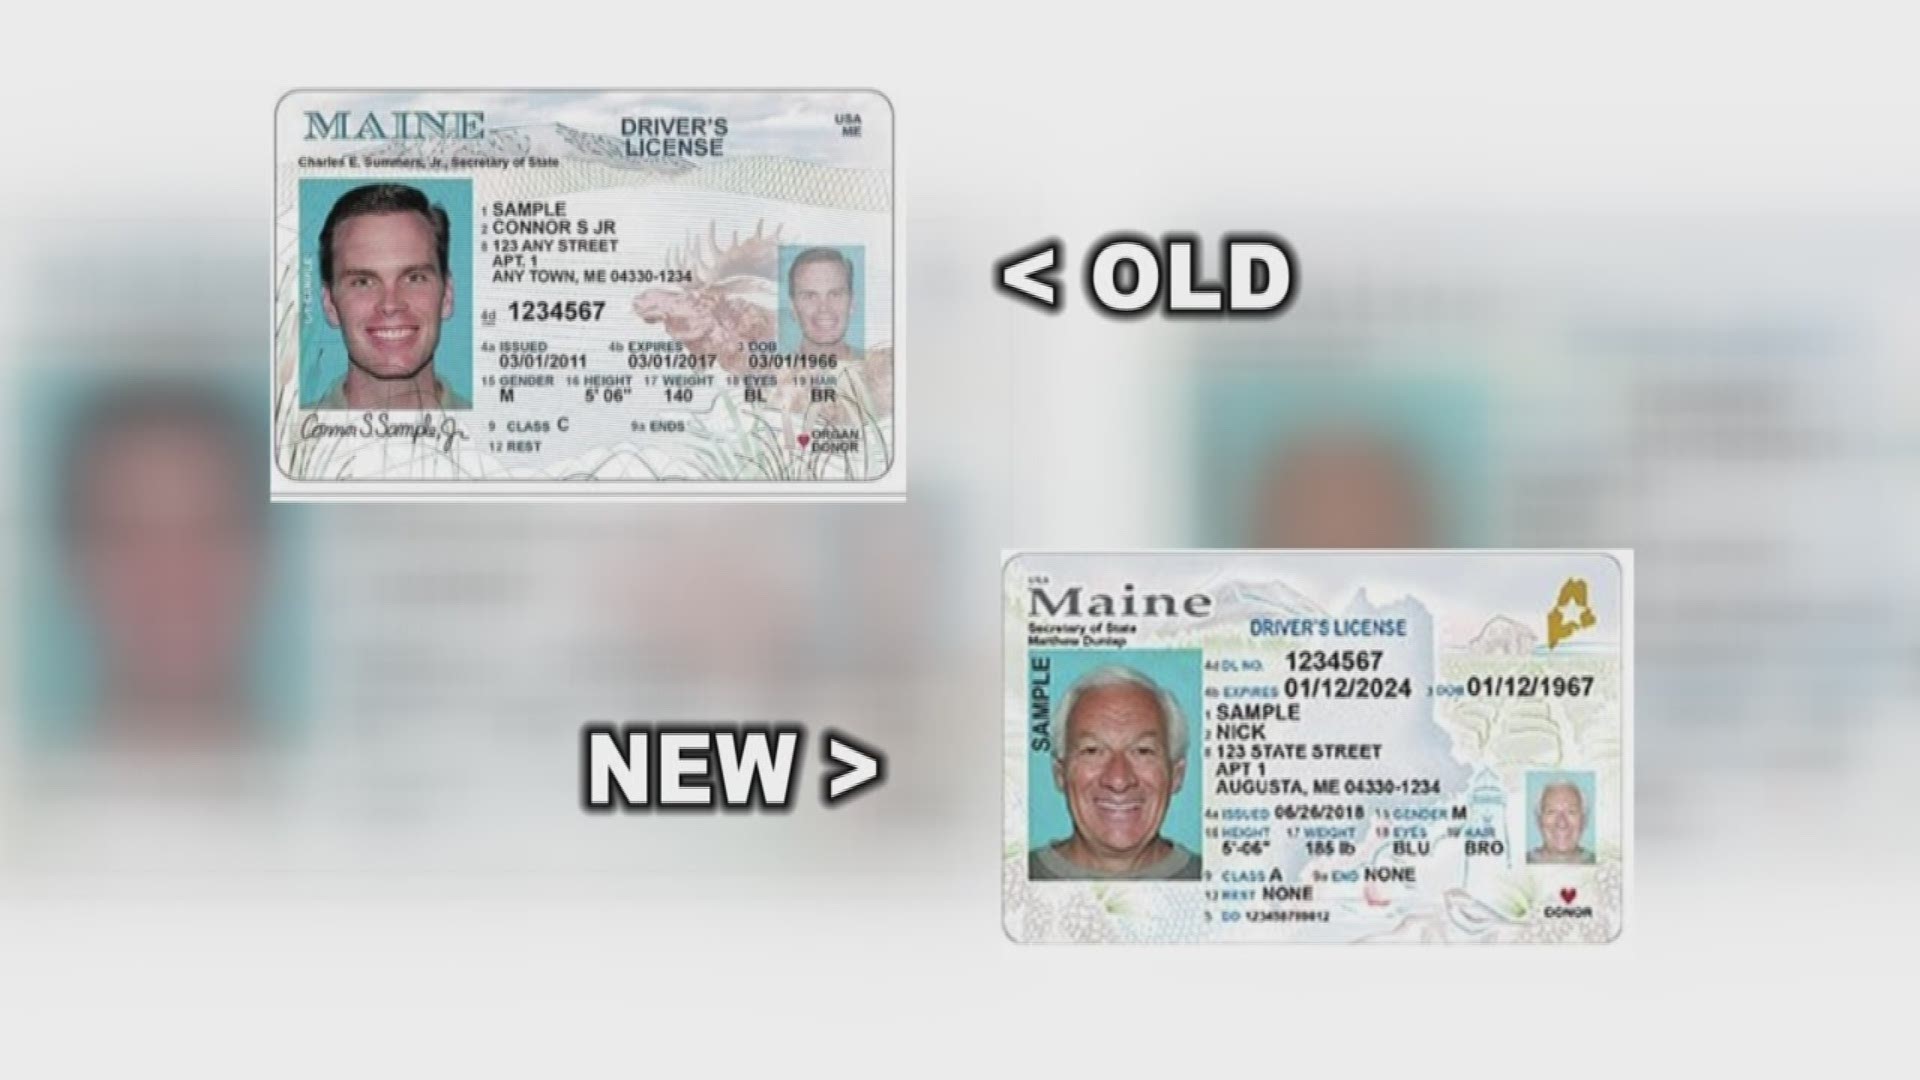 Virginia DMV unveils new driver's license, ID card design